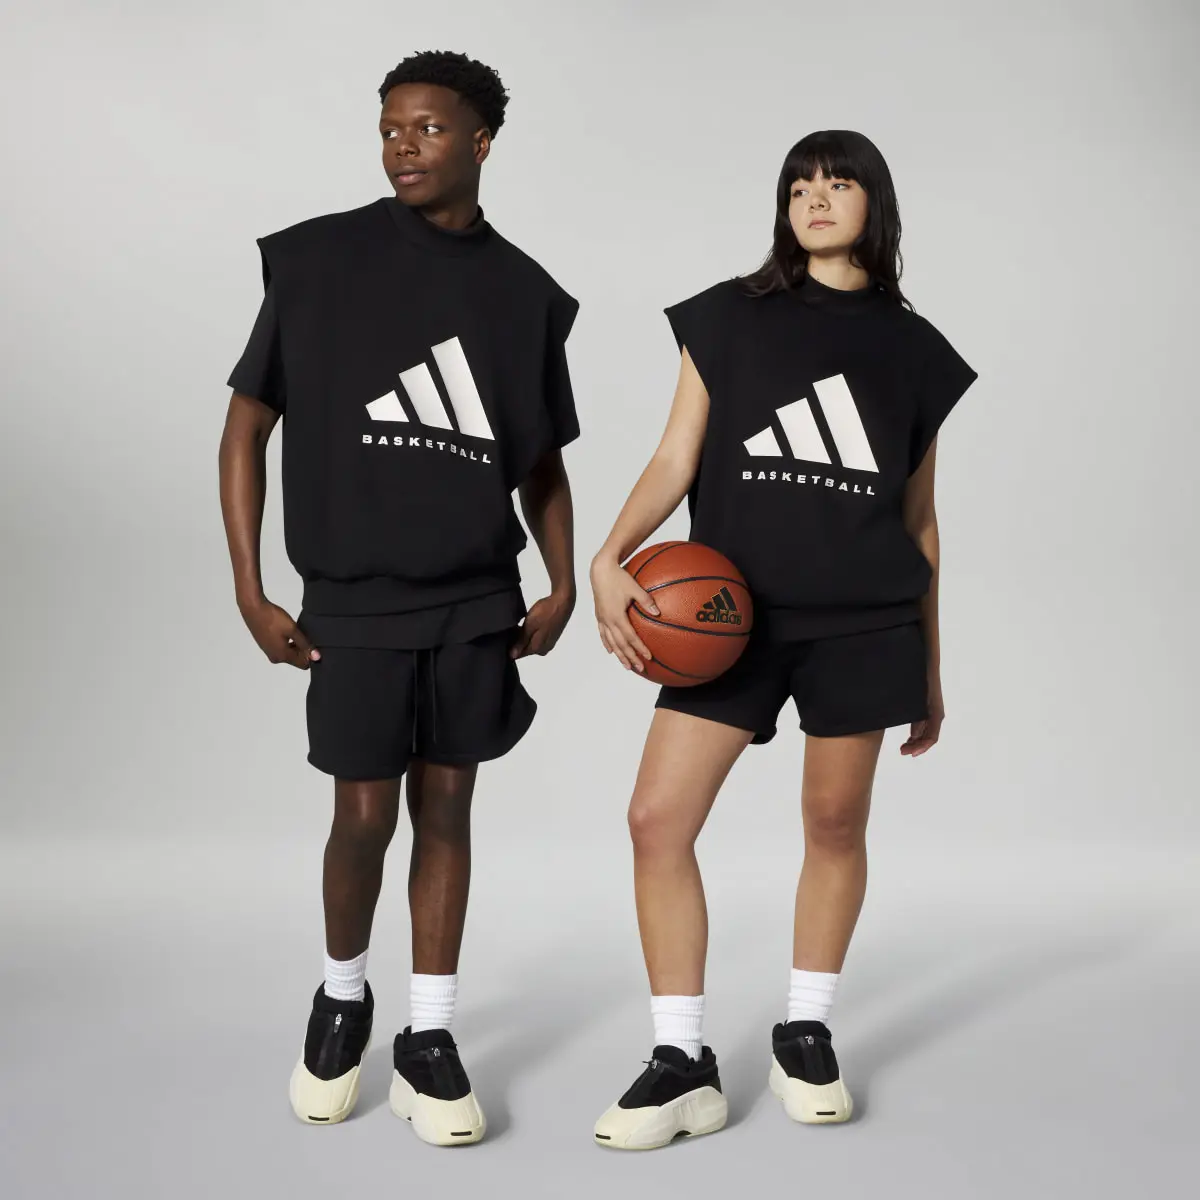 Adidas Sudadera Basketball SIn Mangas (Unisex). 1